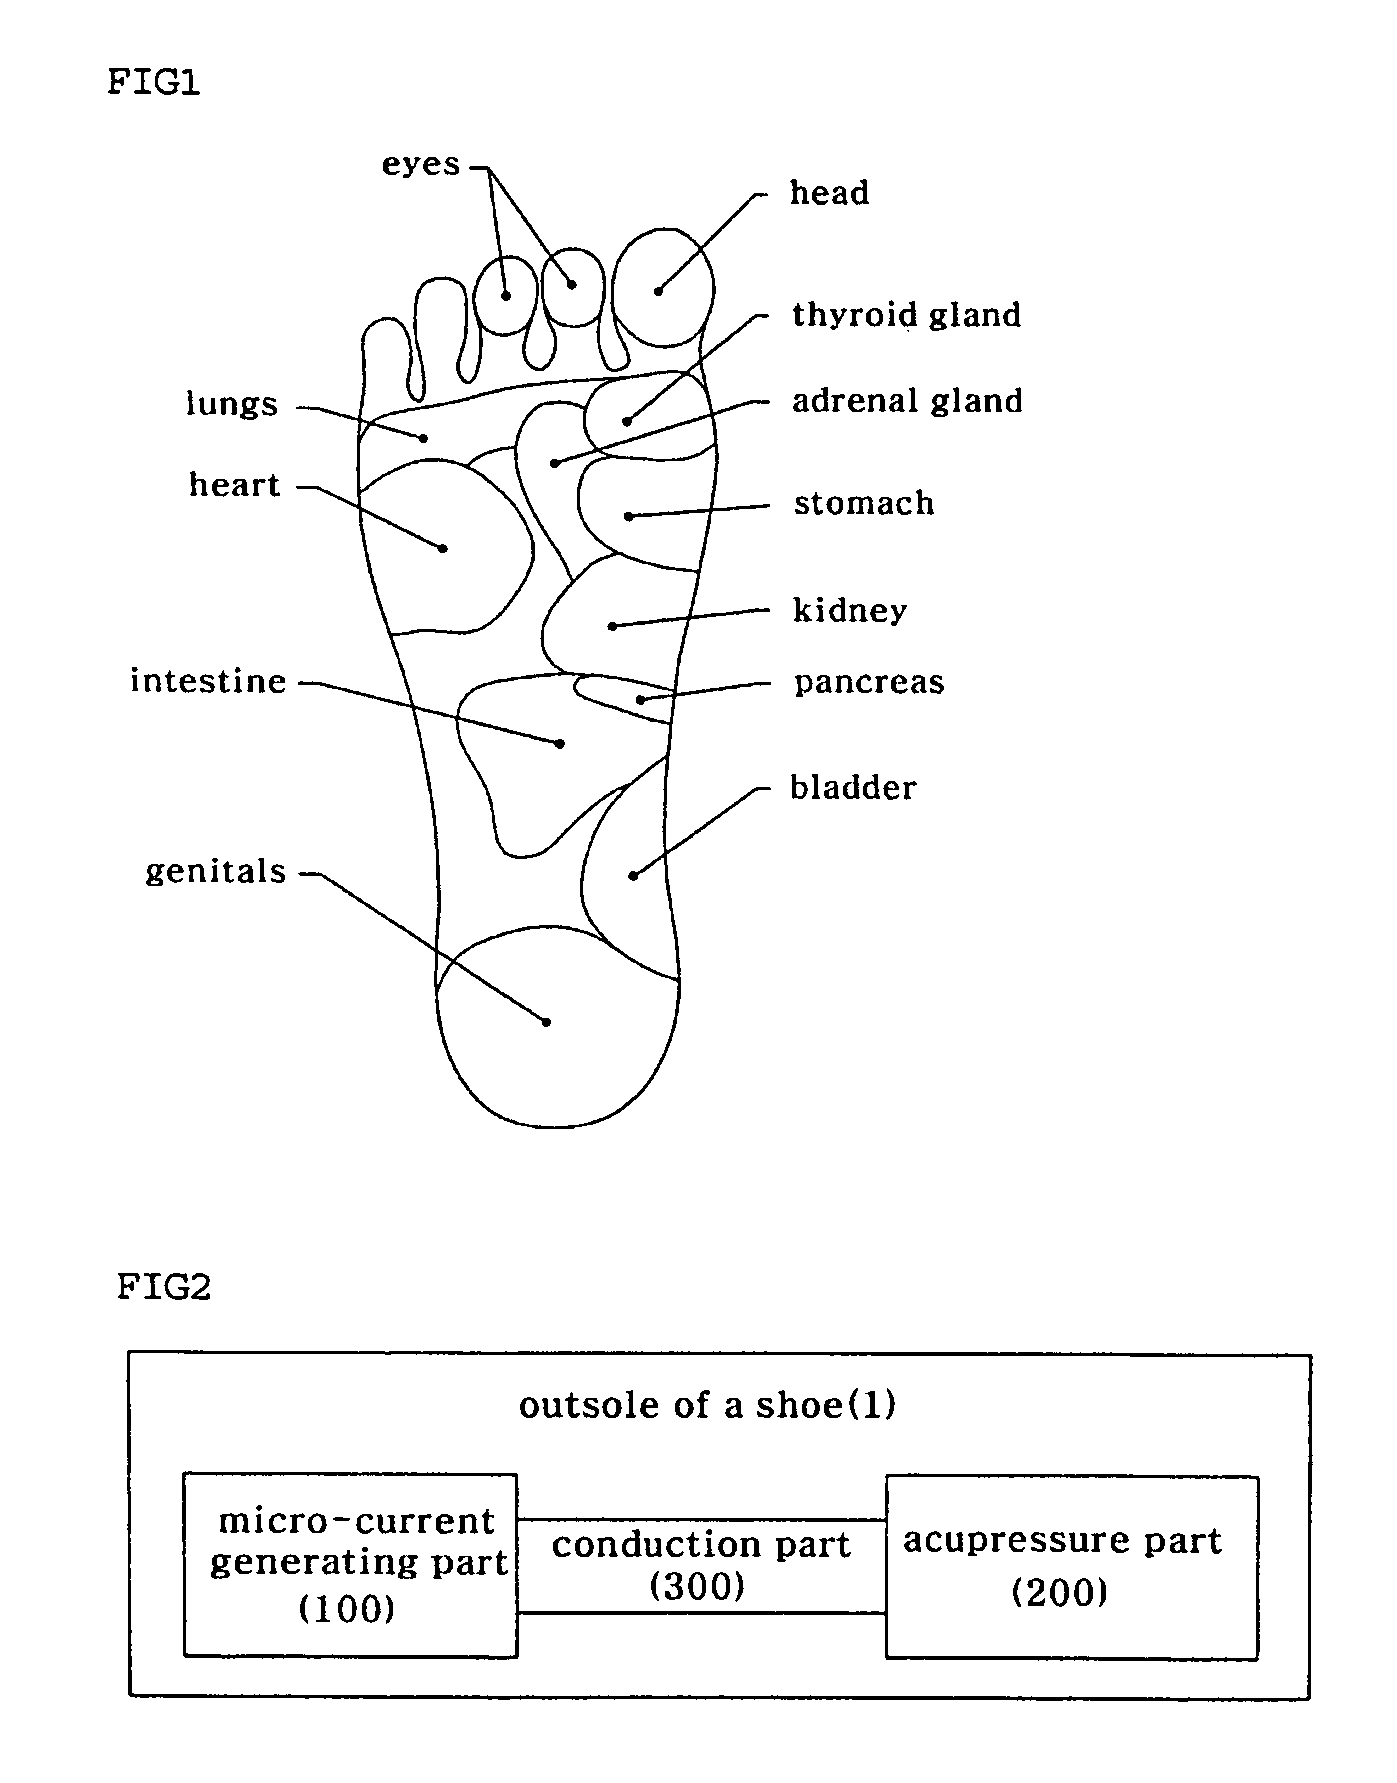 Functional shoe